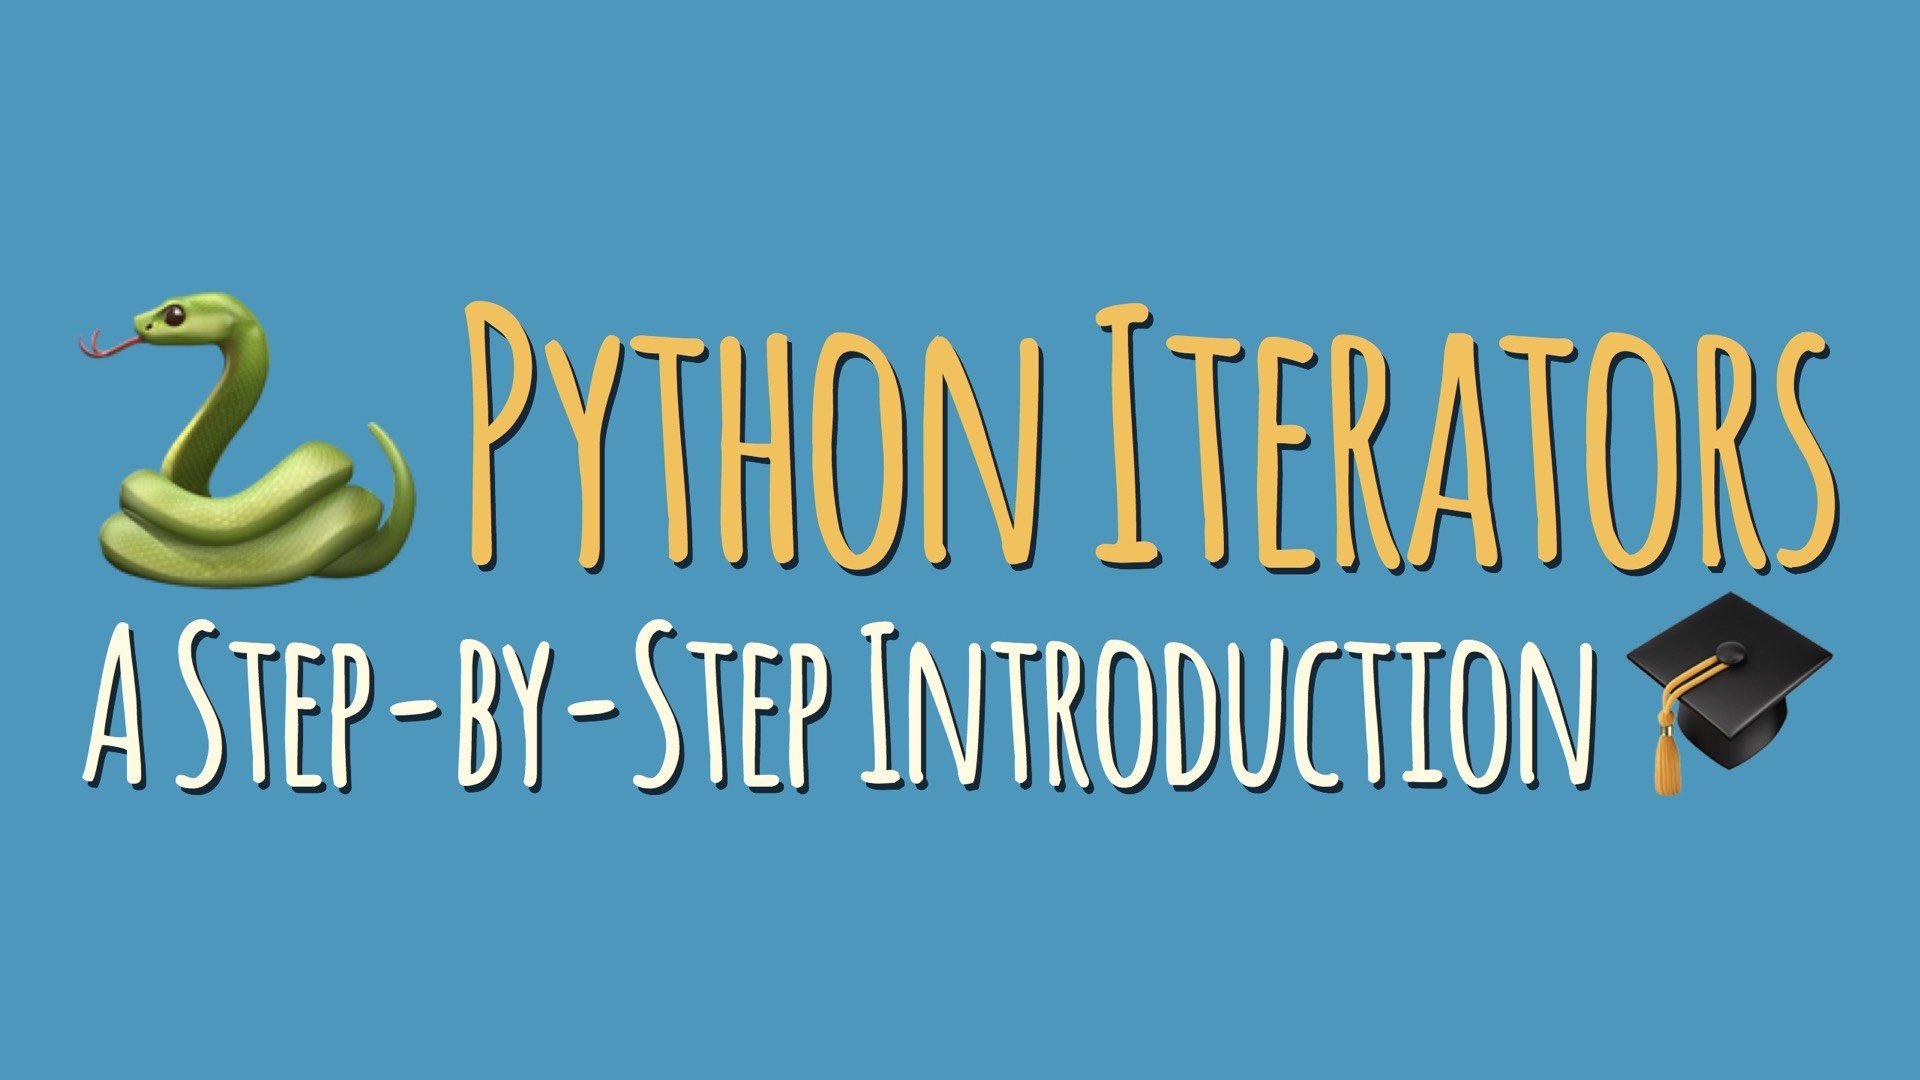 Python Iterators Tutorial